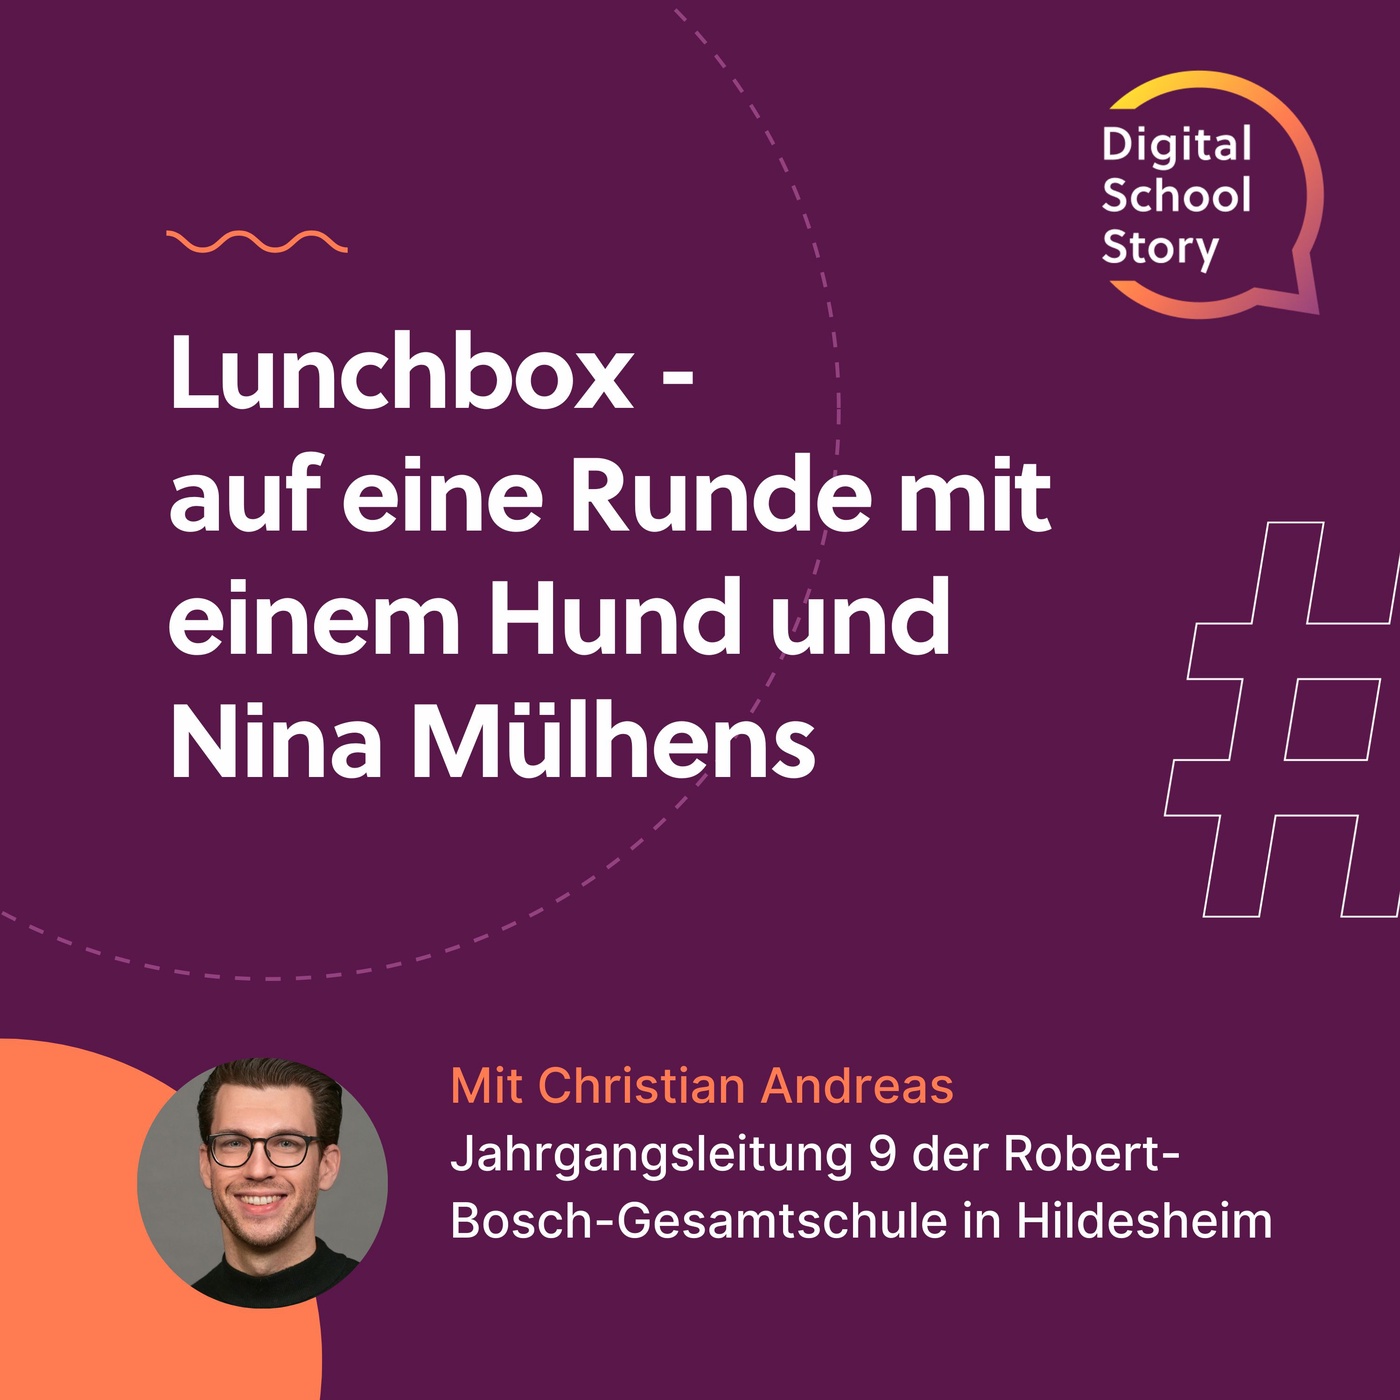 #40 Christian Andreas bei der #lunchbox